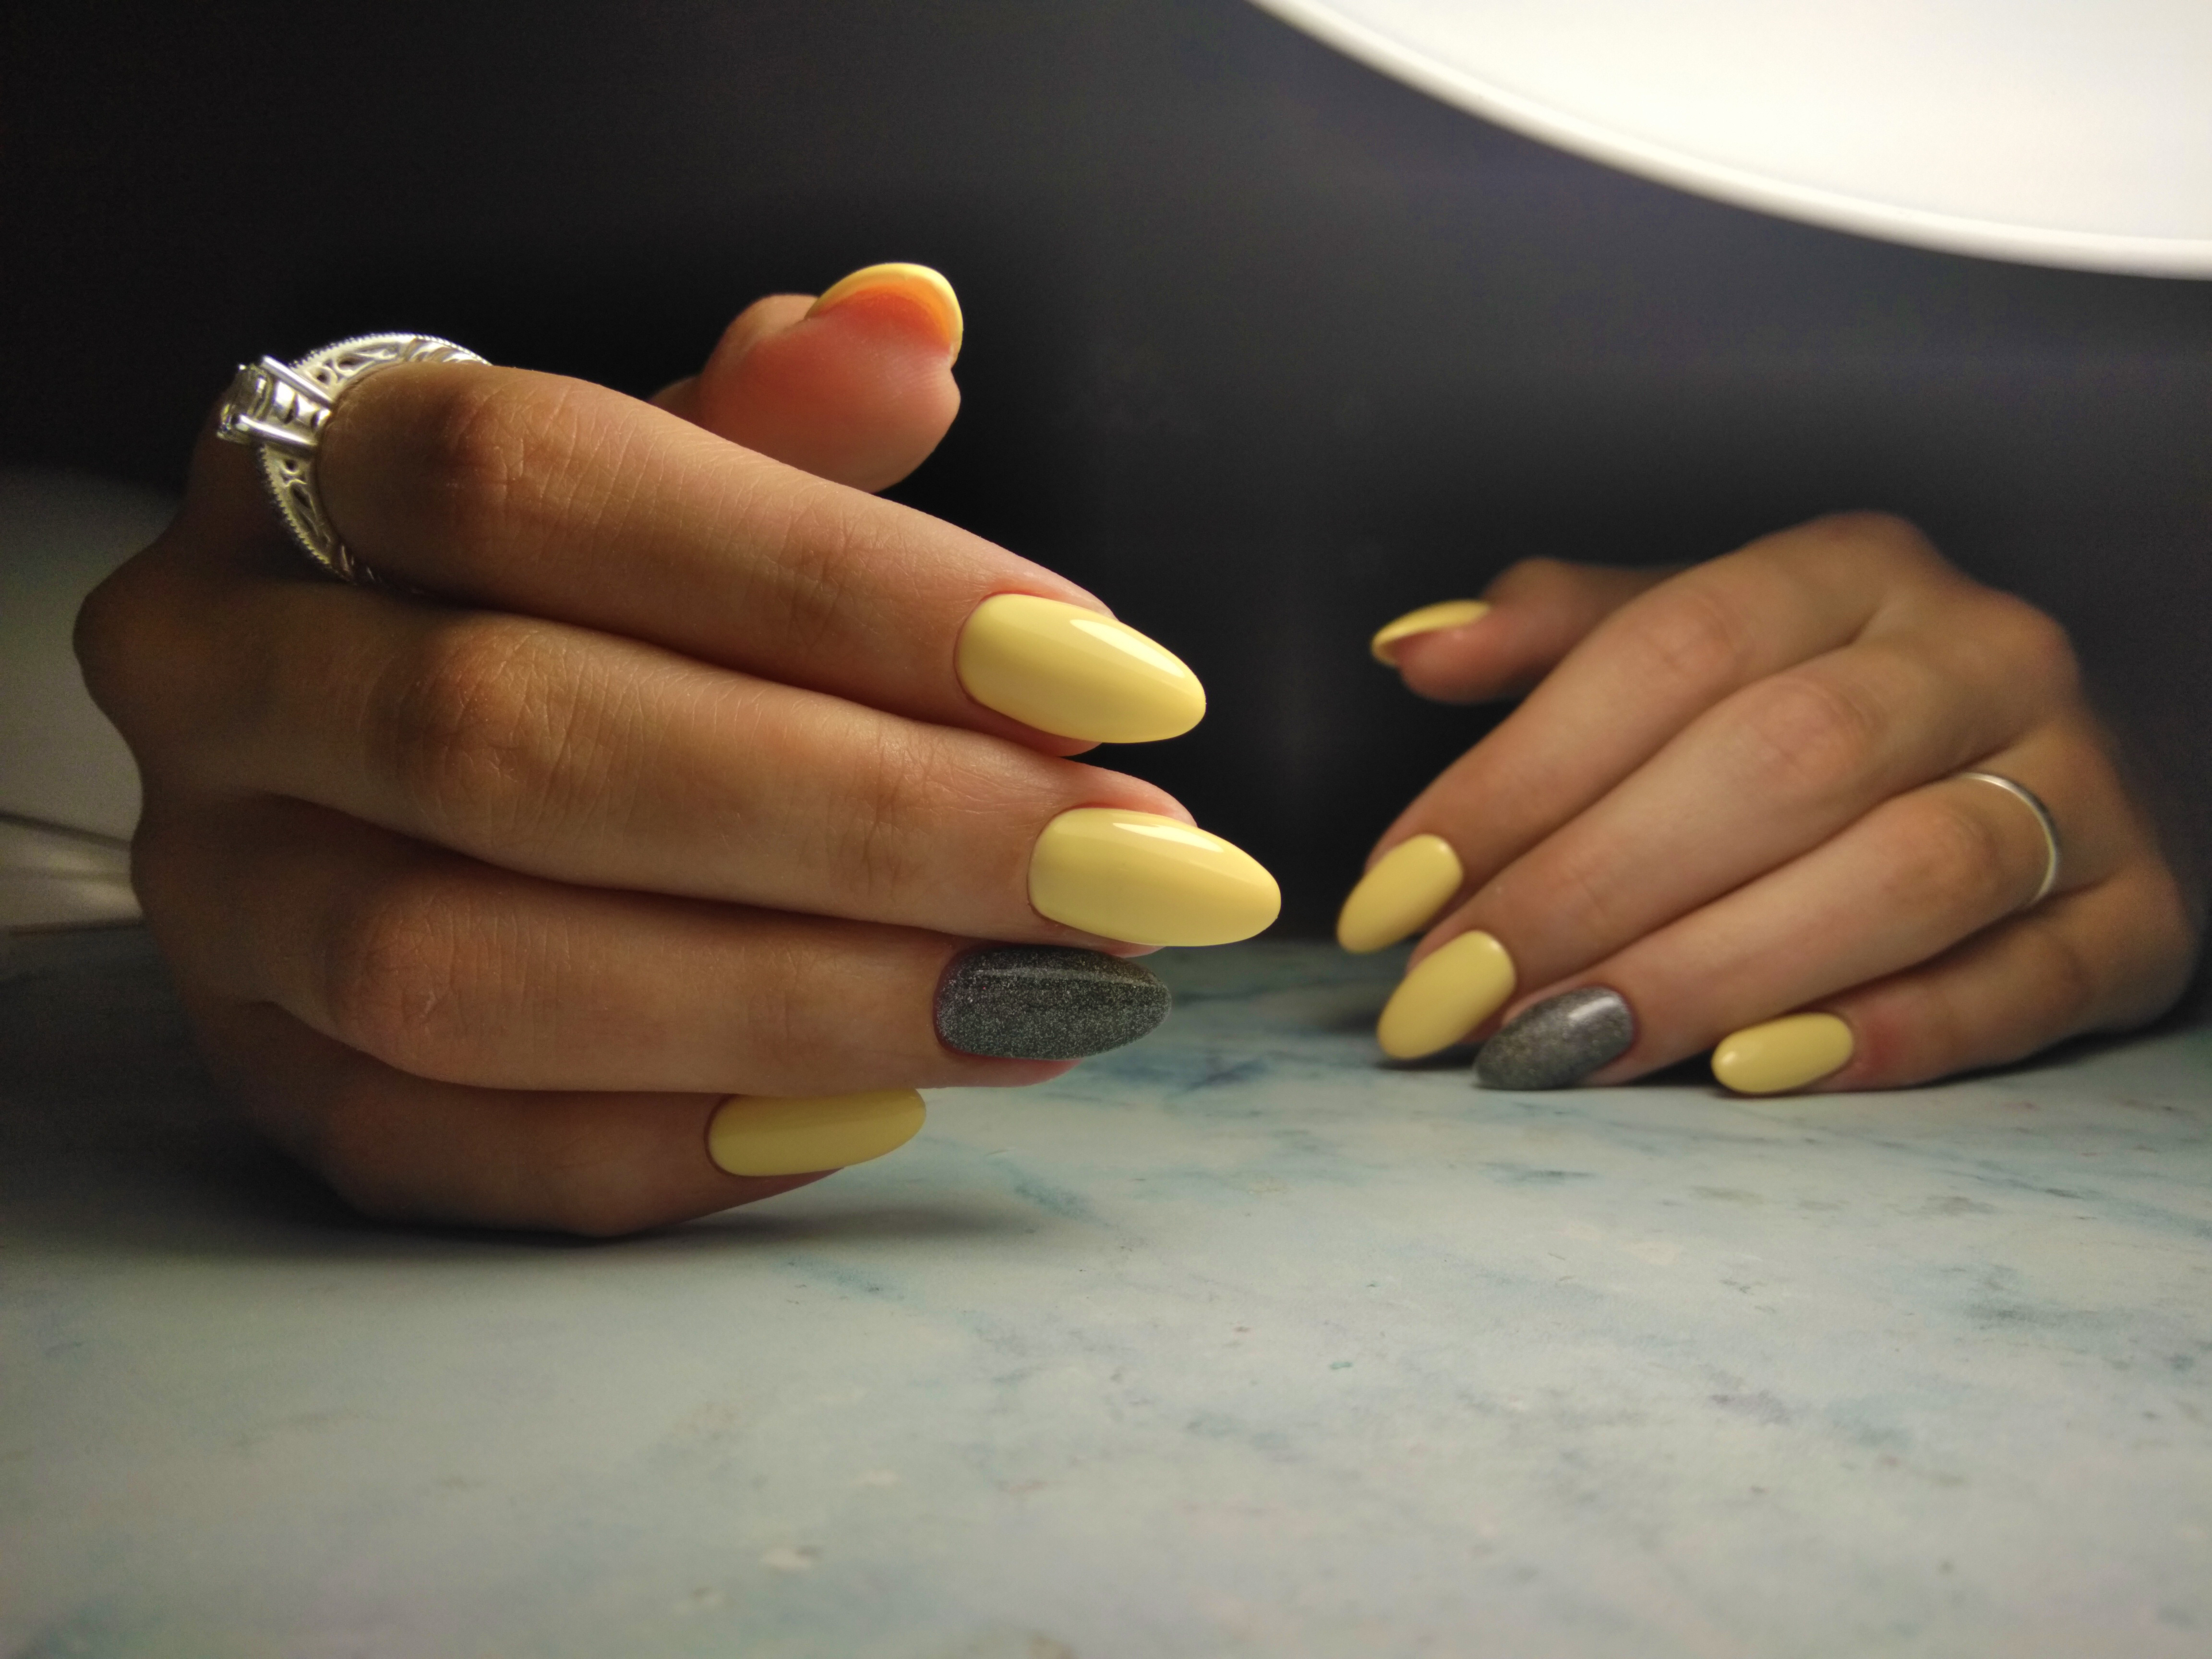 Ongles accentué jaune et gris. | Source : Getty Images